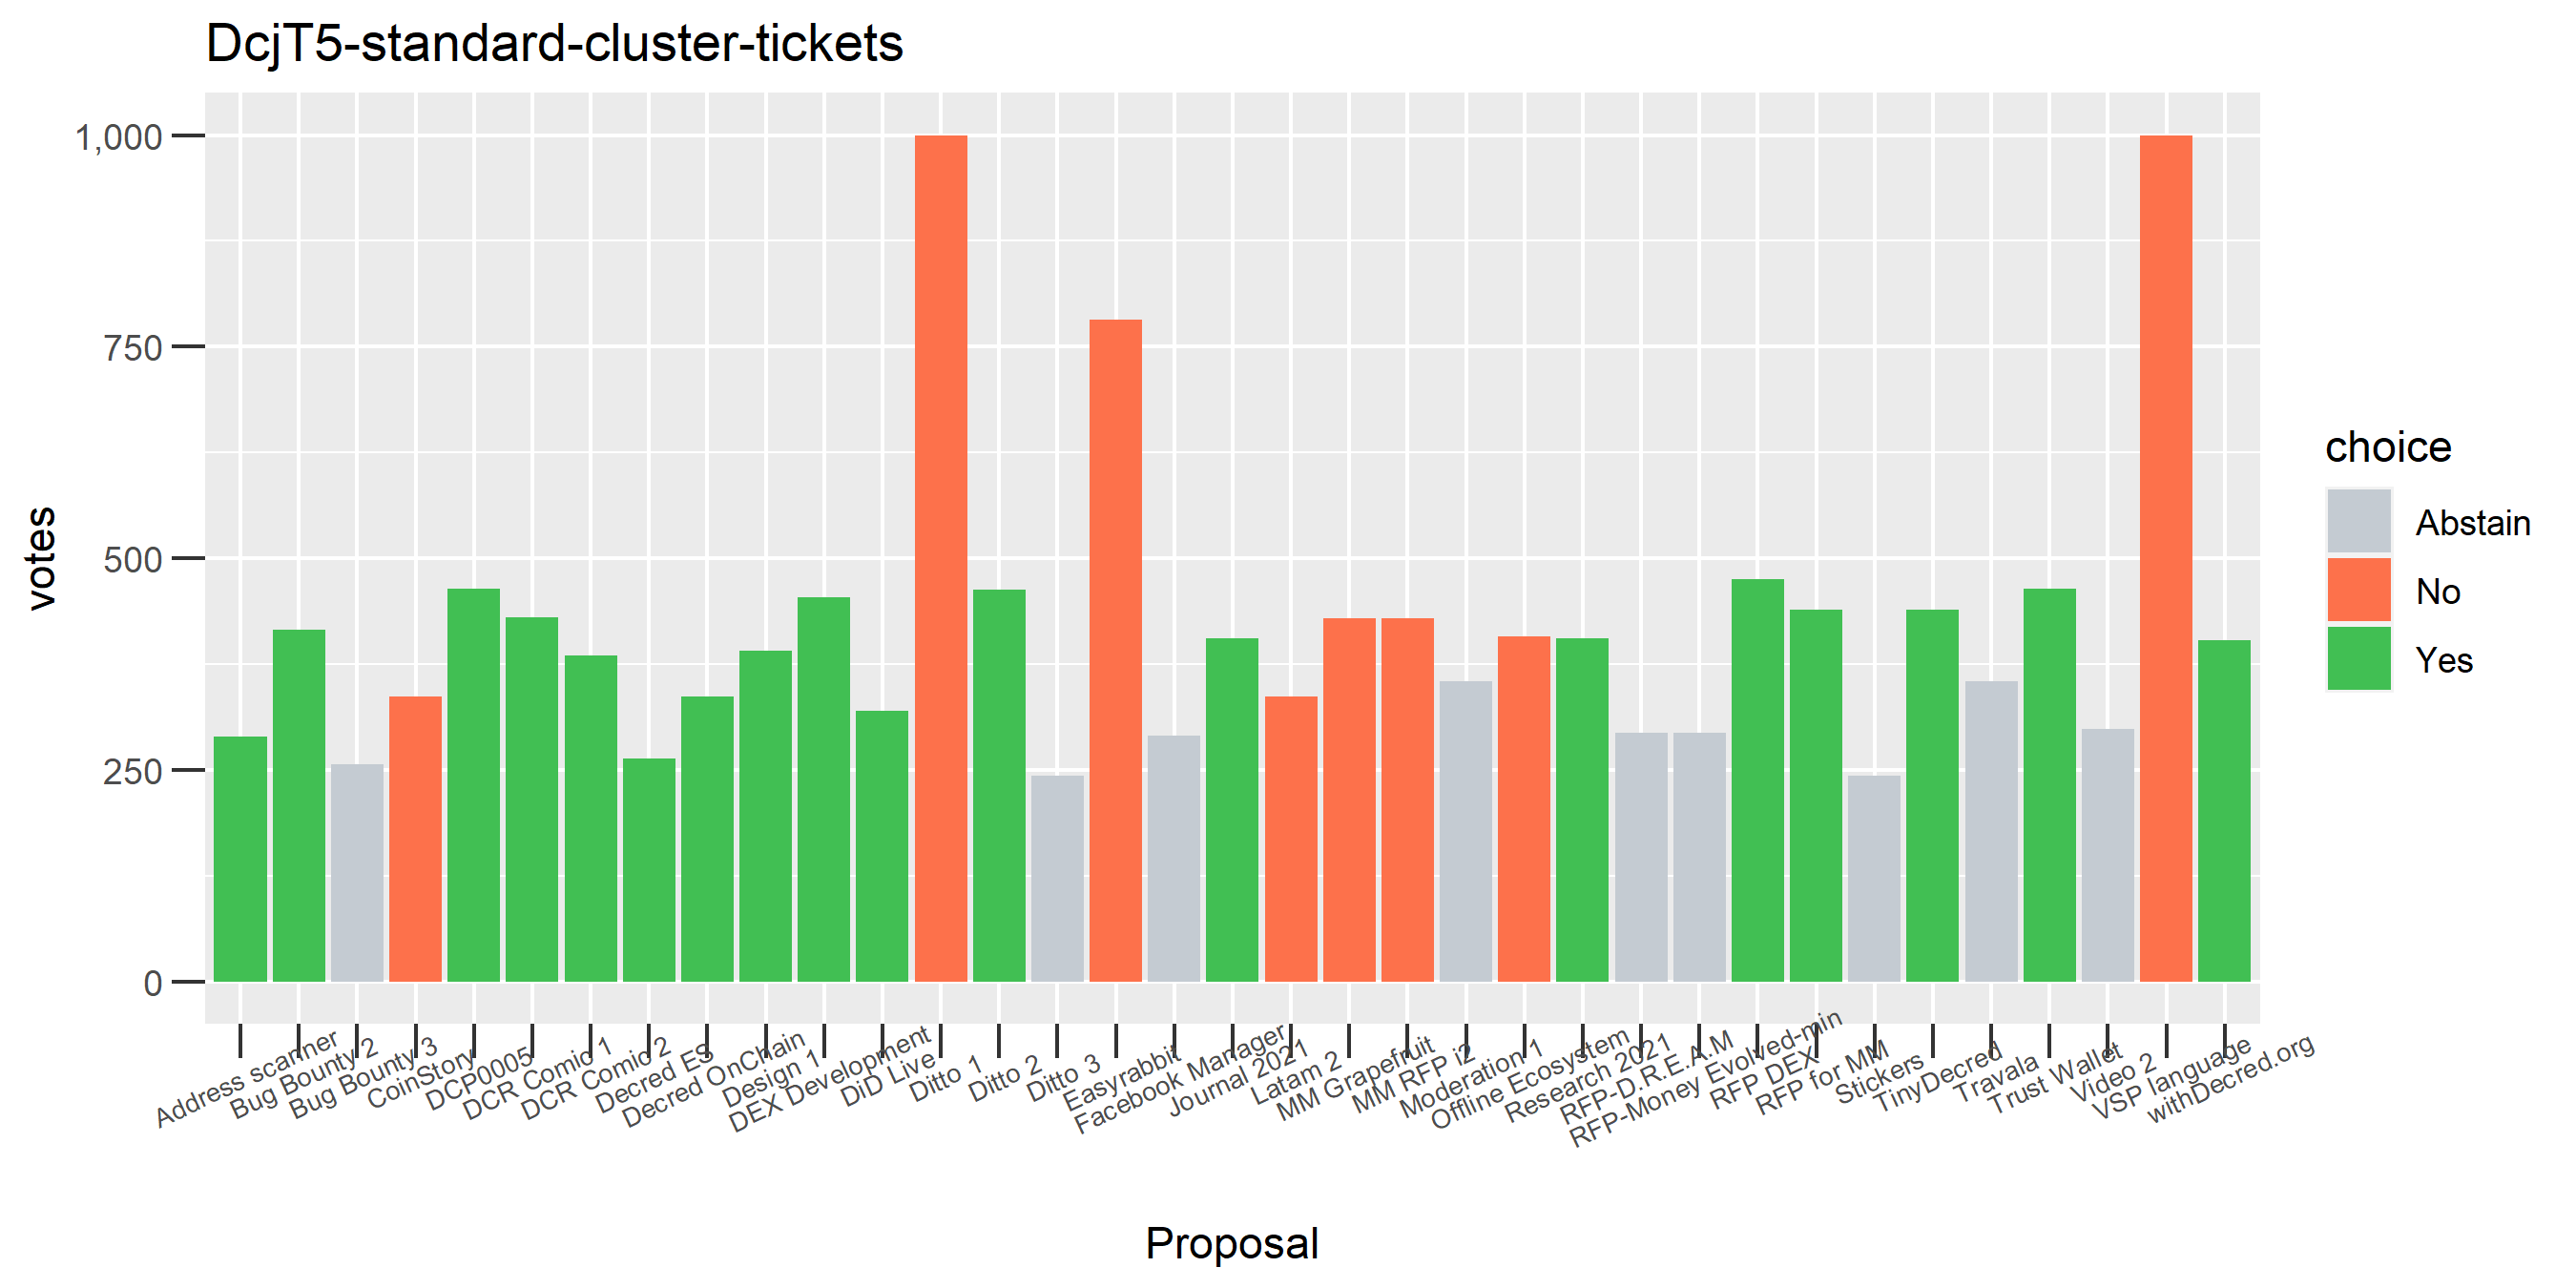 DcjT5-standard-cluster-tickets